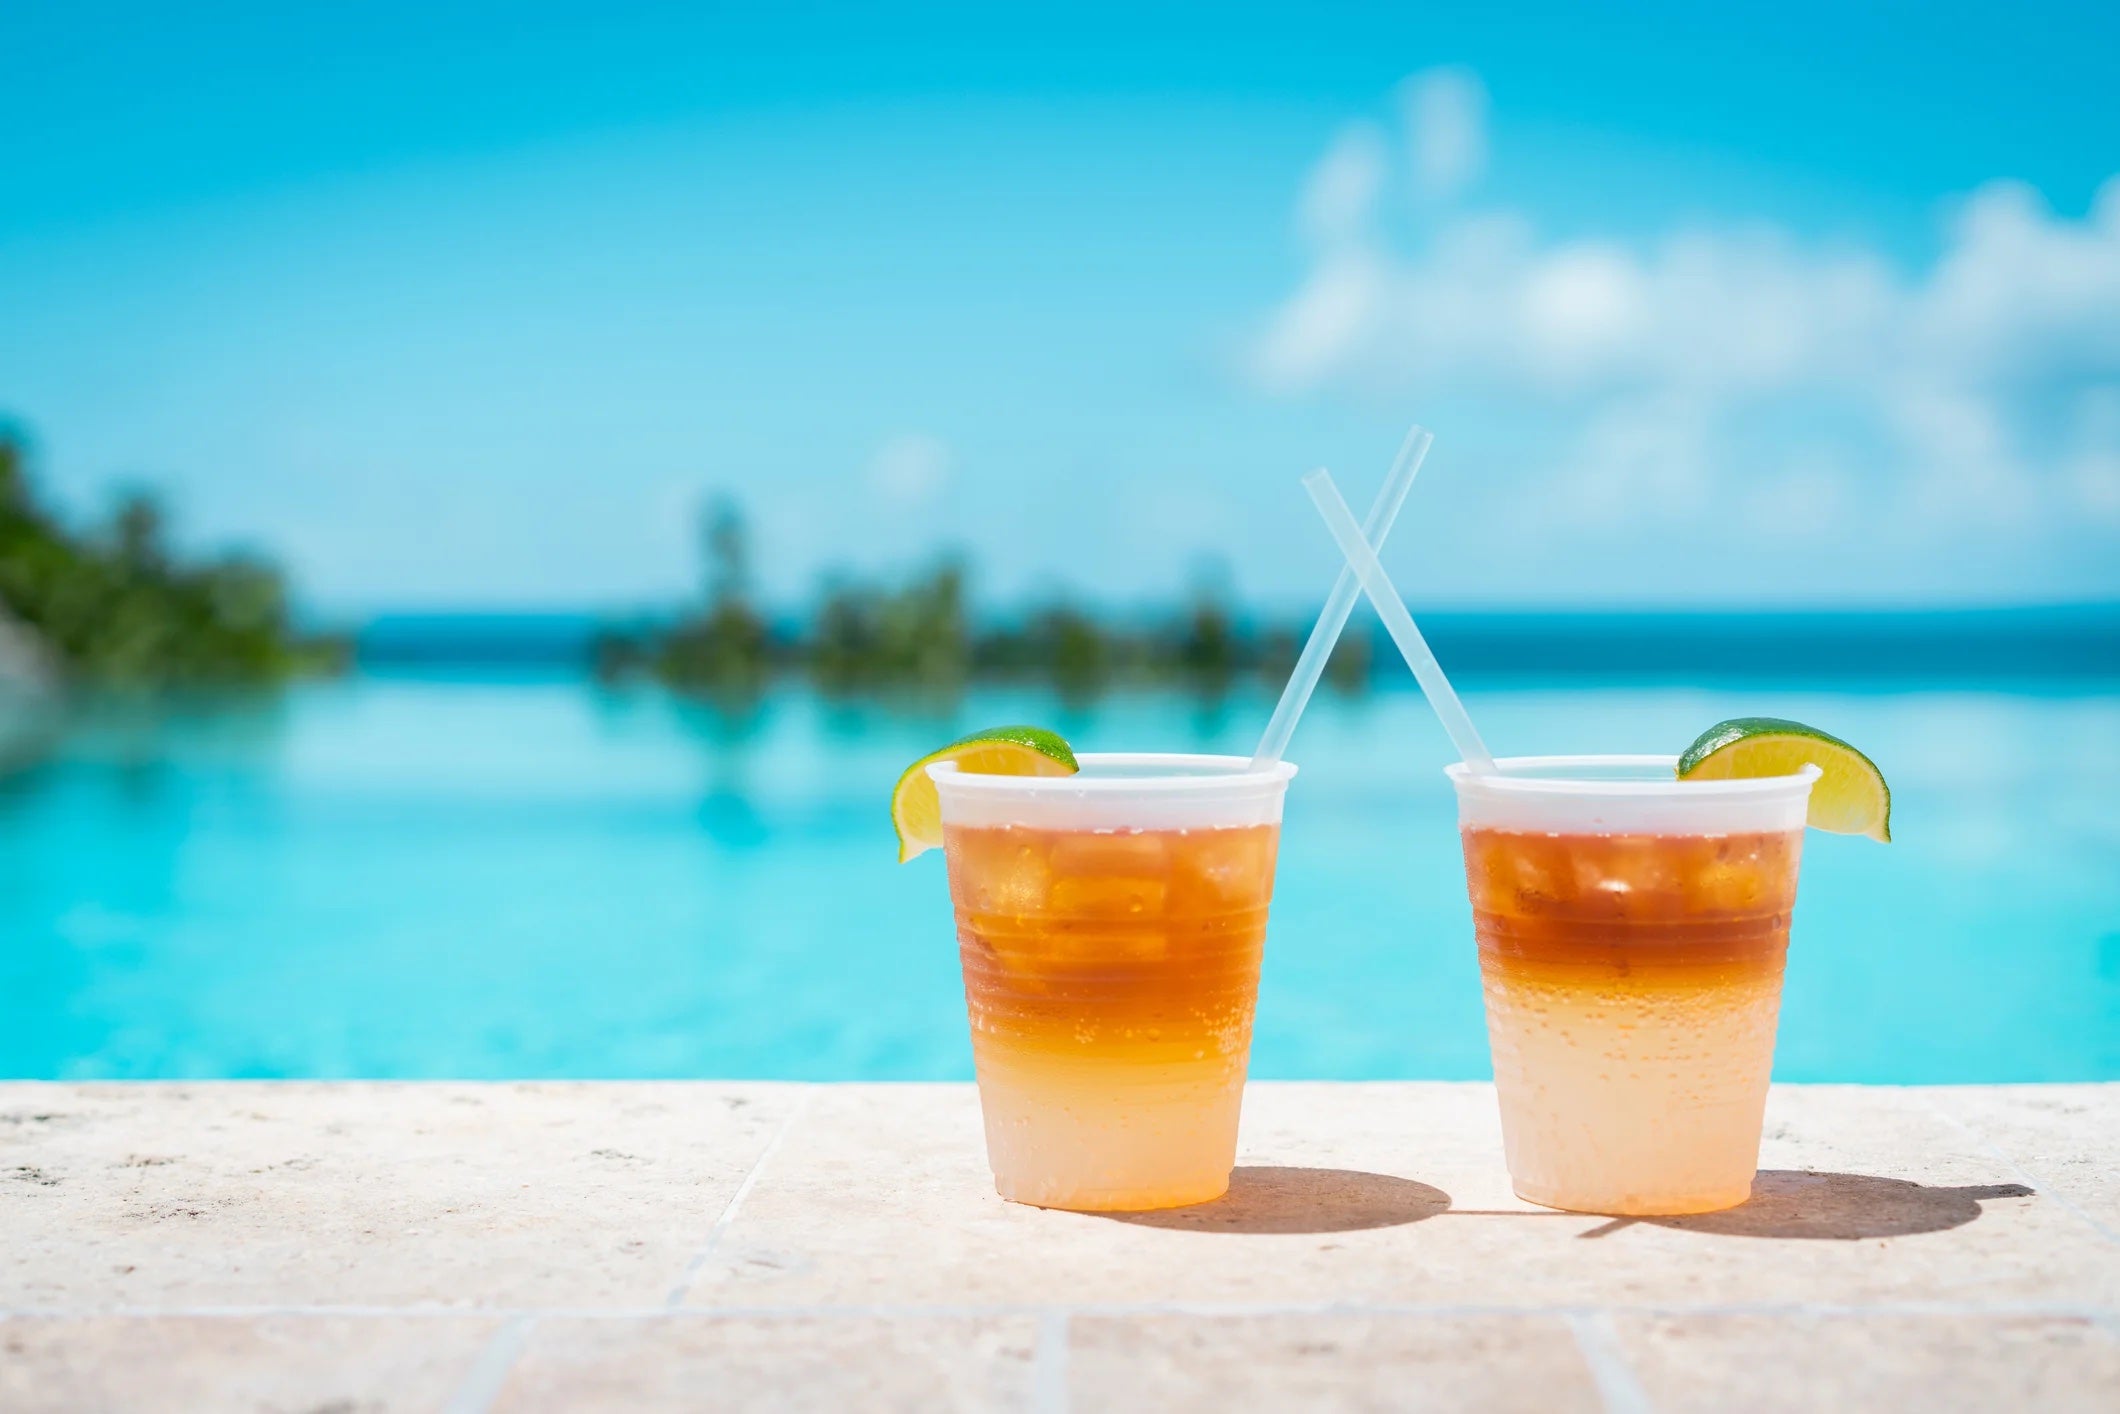 Poolside drinks at a tropical resortPoolside drinks at a tropical resort